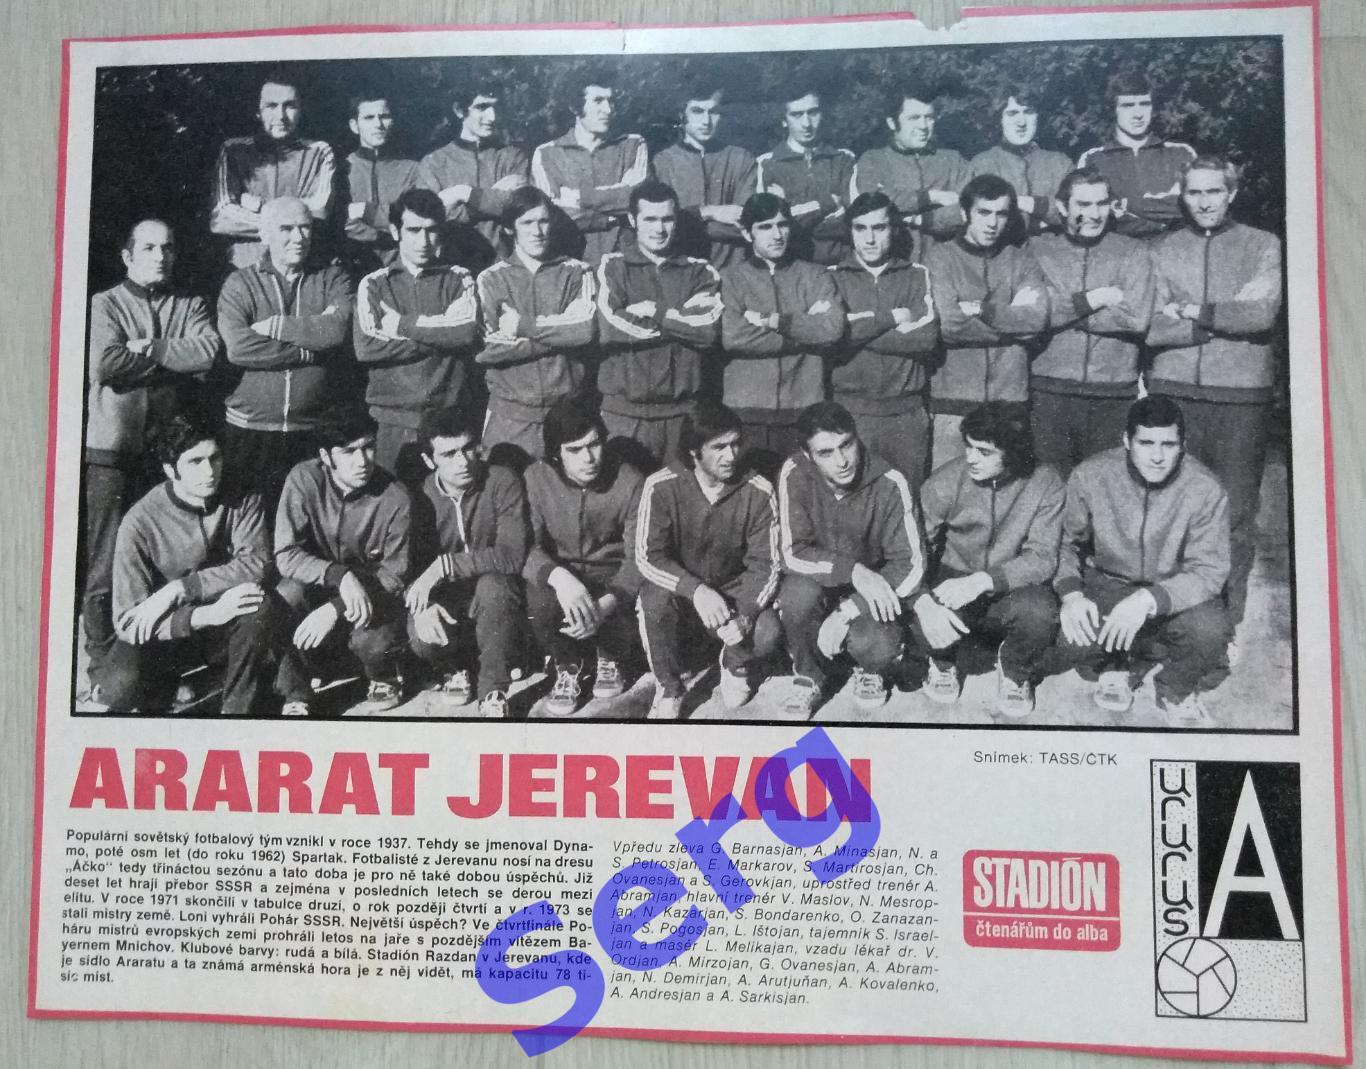 Постер Арарат Ереван, СССР из журнала Стадион (Stadion)